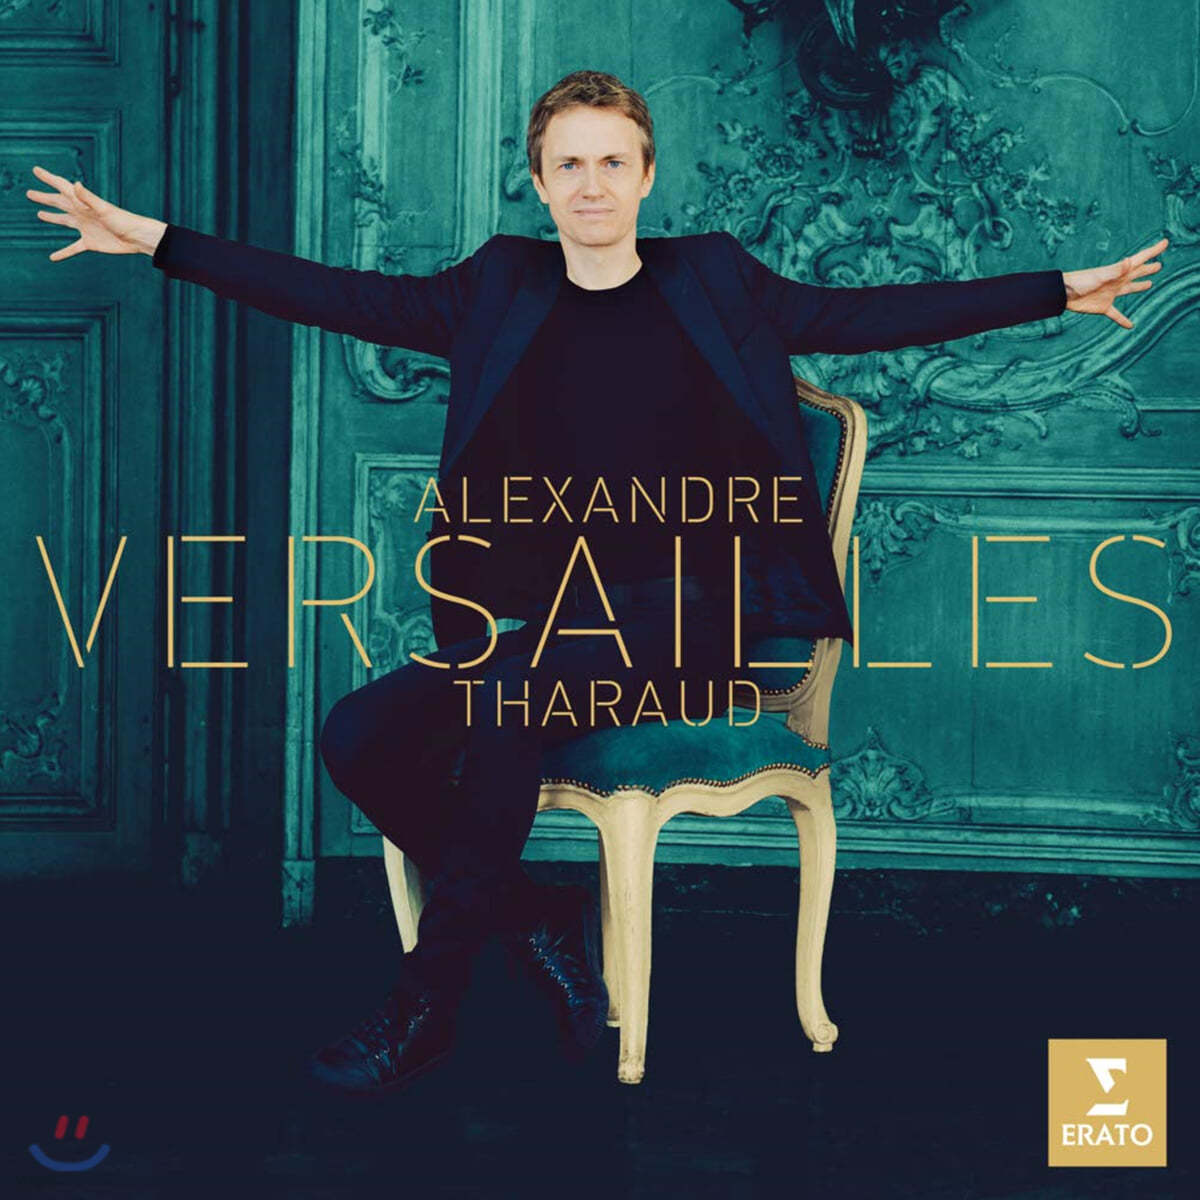 Alexandre Tharaud 베르사유-프랑스 바로크 음악 - 알렉상드르 타로 (Versailles) [LP]